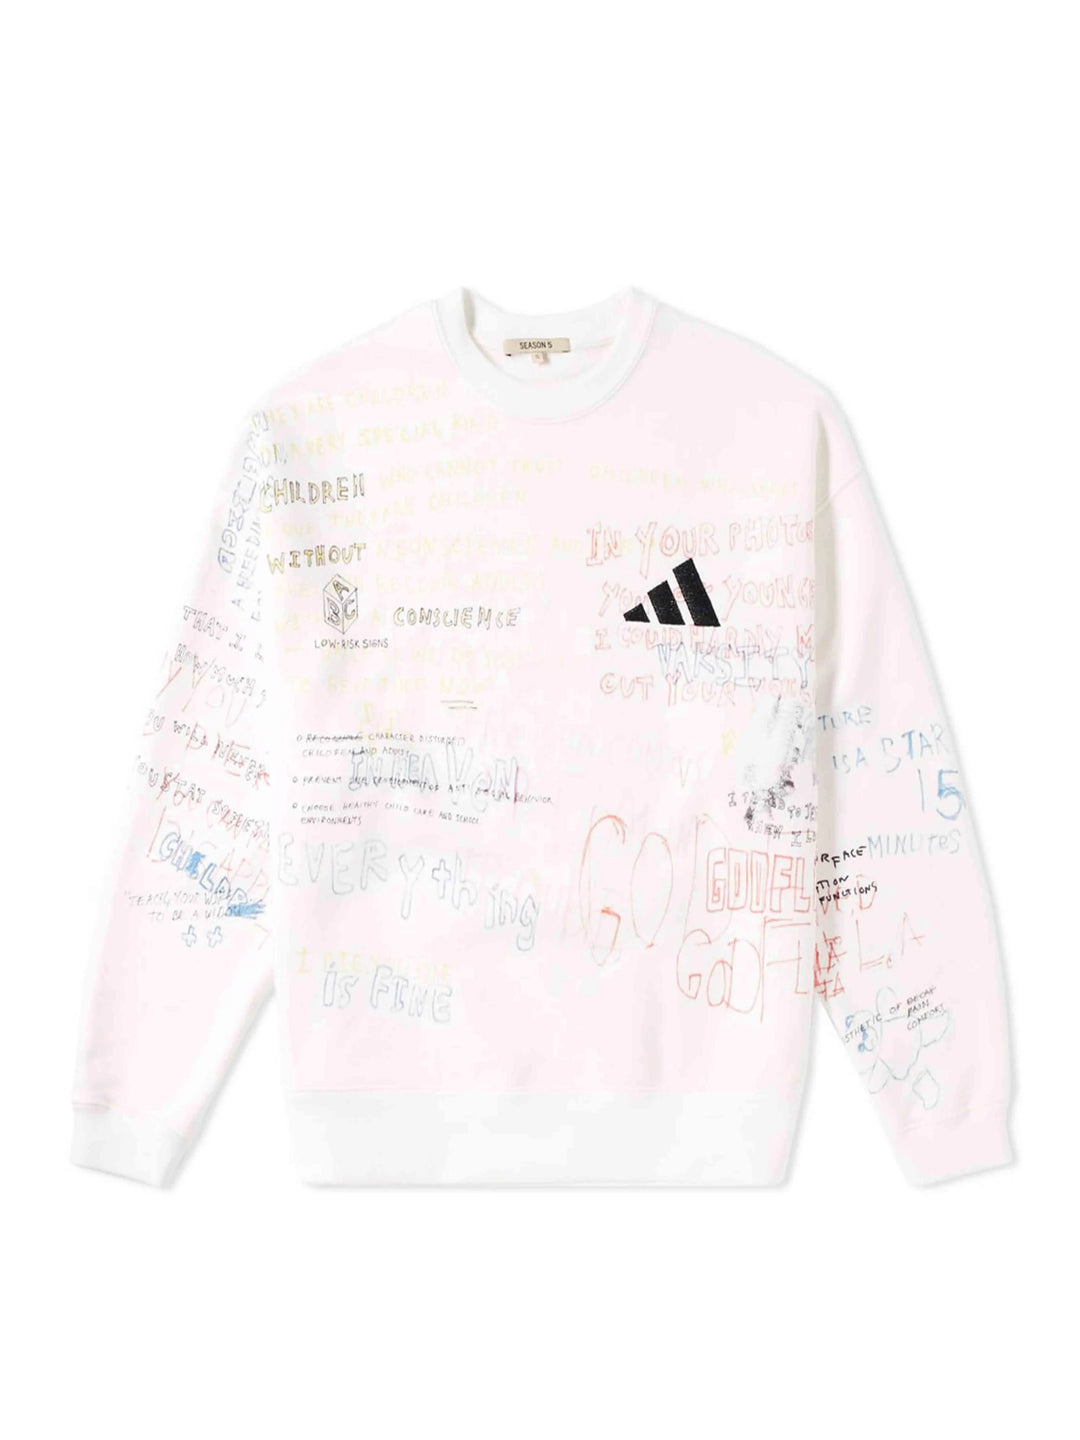 Adidas Yeezy Season 5 Crewneck Sweatshirt Off White Prior